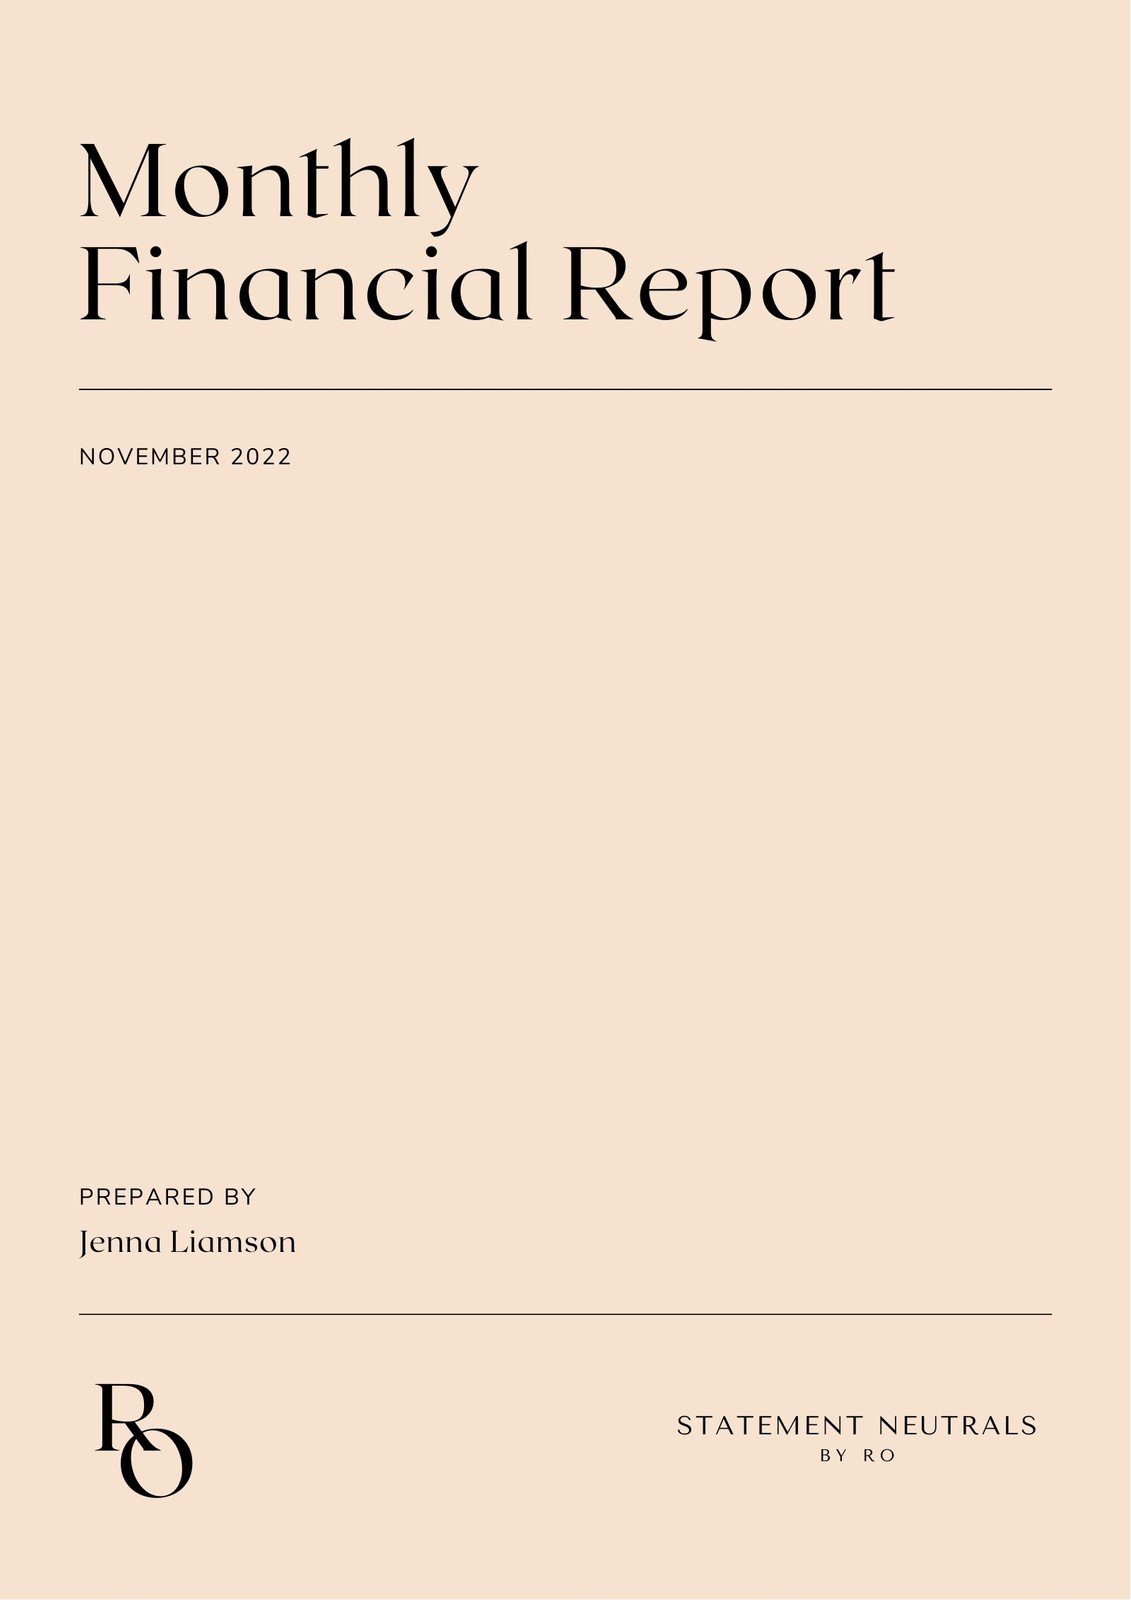 Free custom printable financial report templates